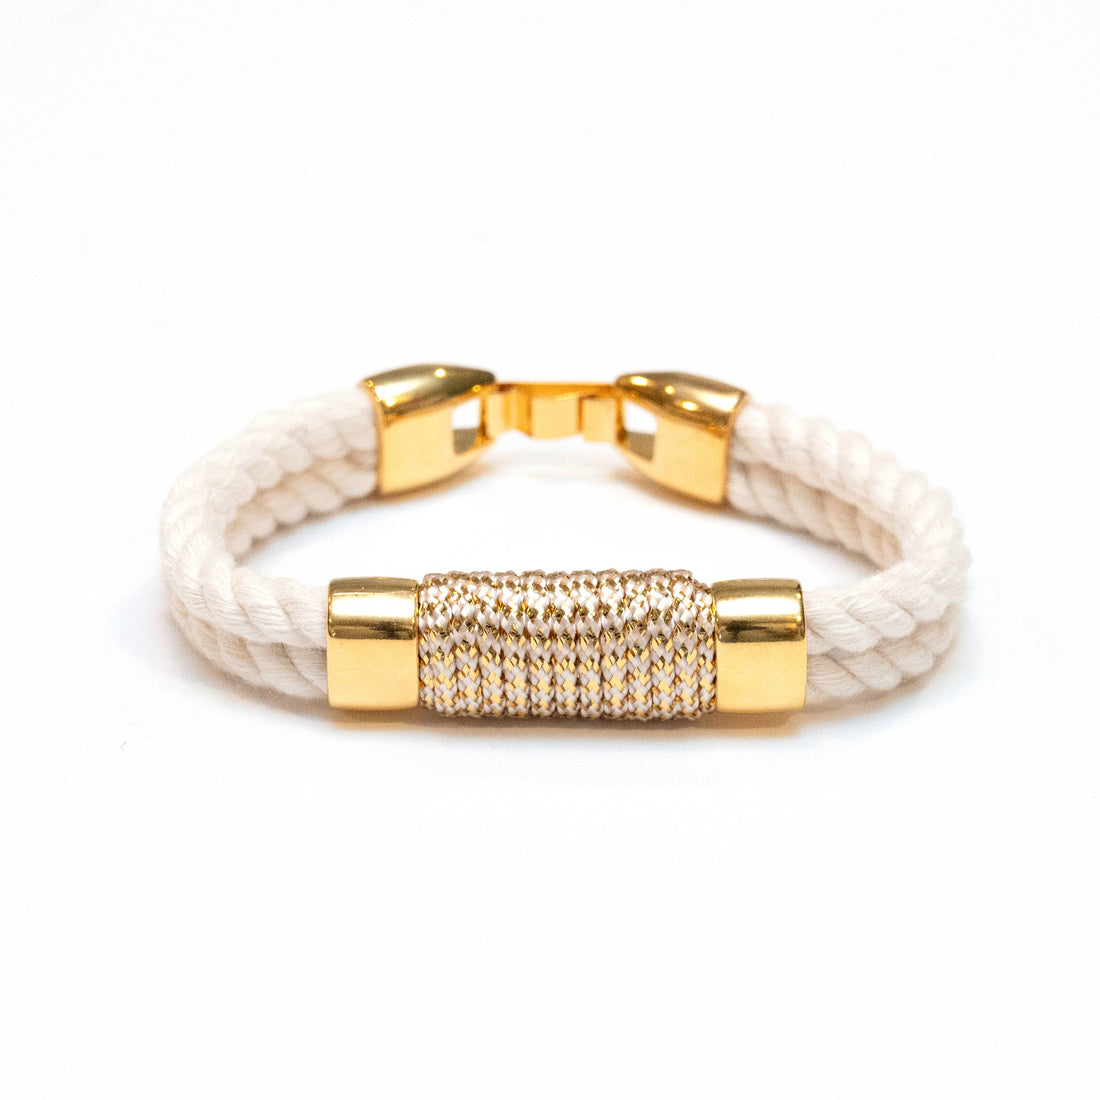 Tremont Bracelet - Ivory/Metallic Gold: M